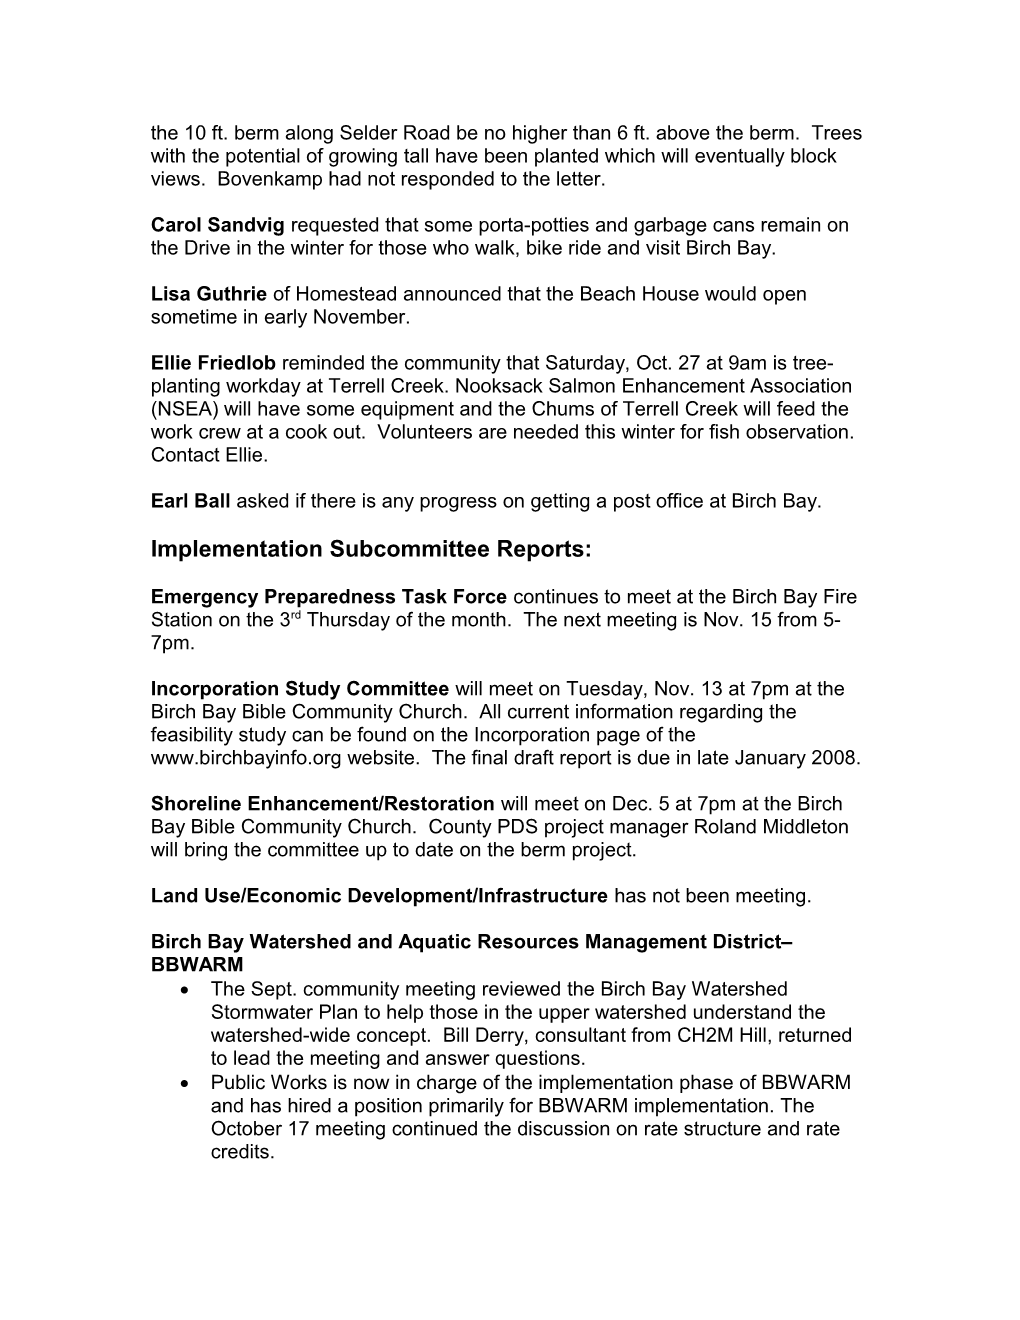 Birch Bay Steering Committee Minutes